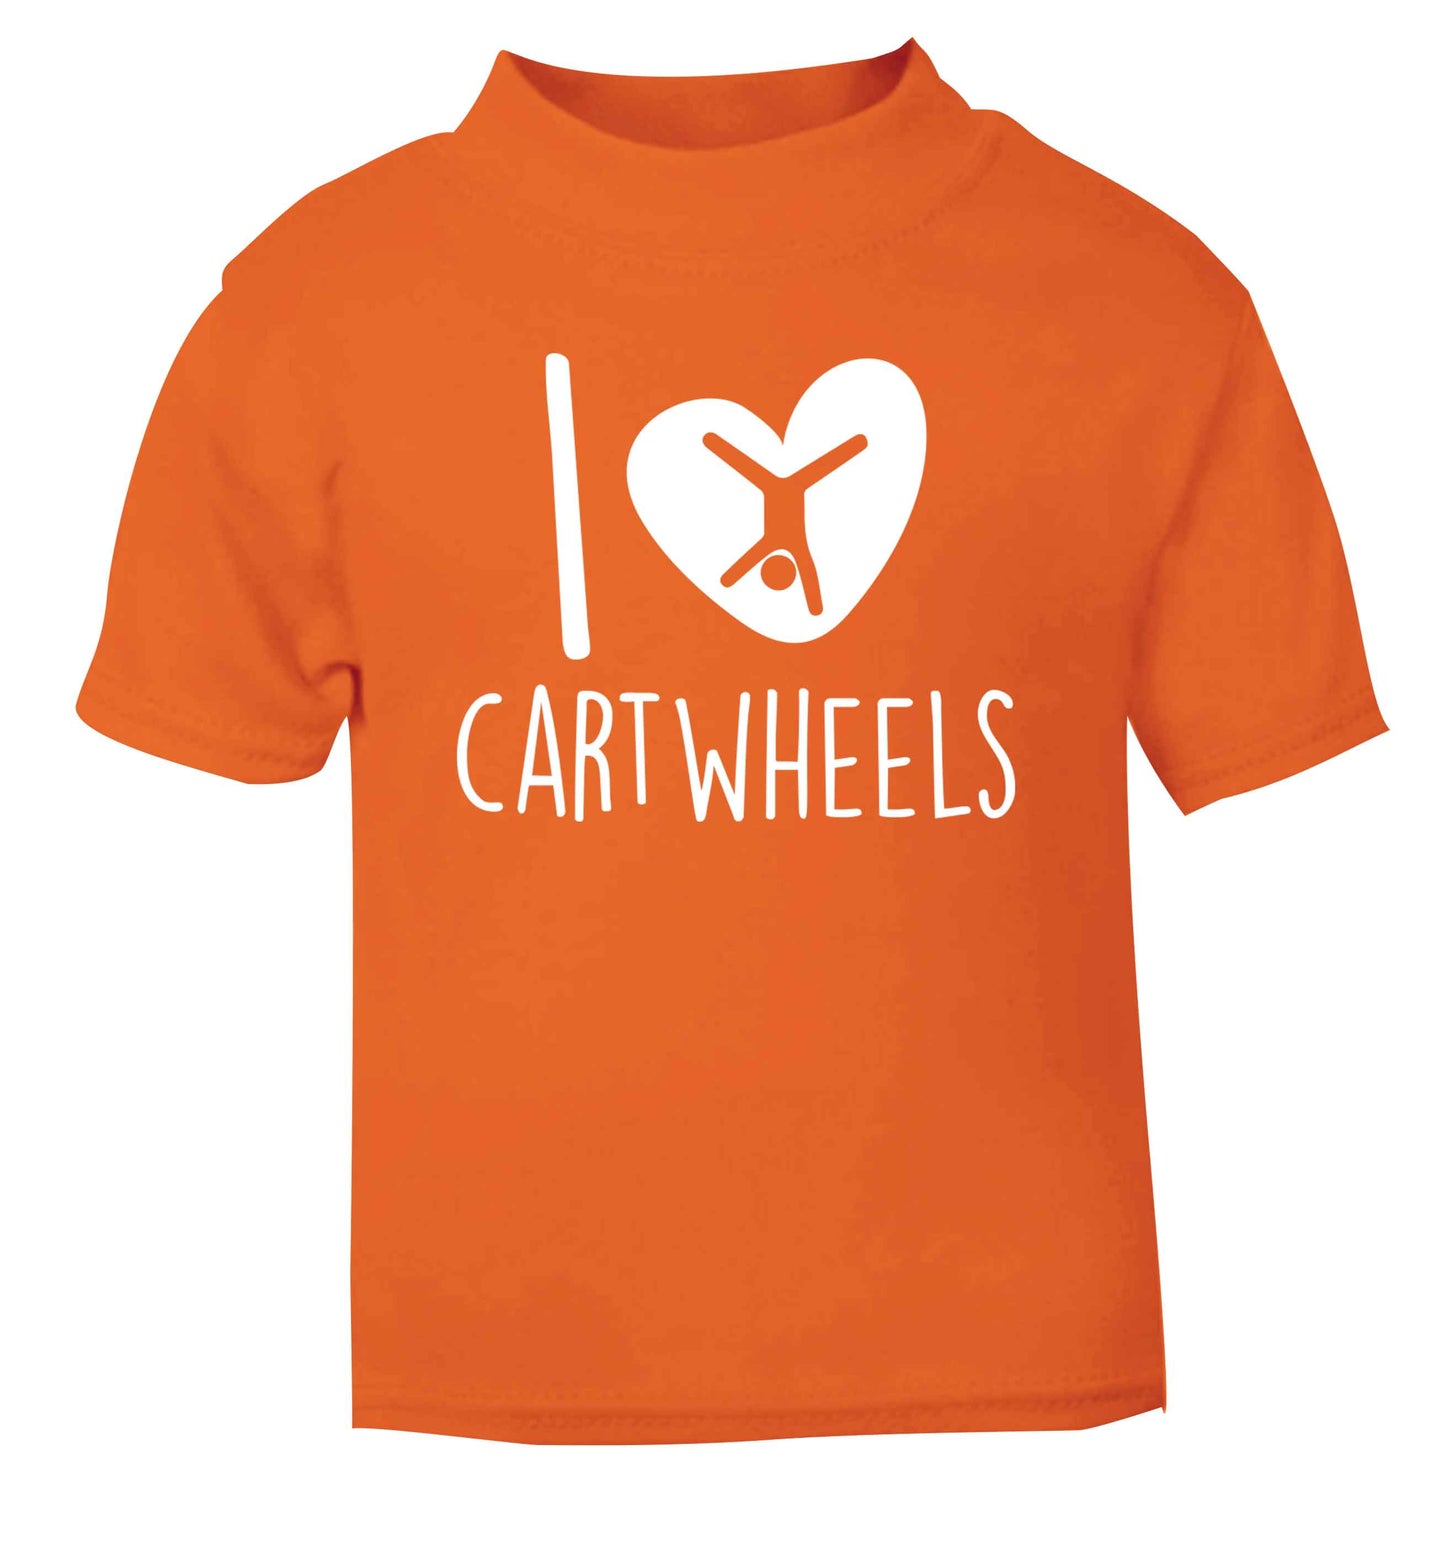 I love cartwheels orange Baby Toddler Tshirt 2 Years